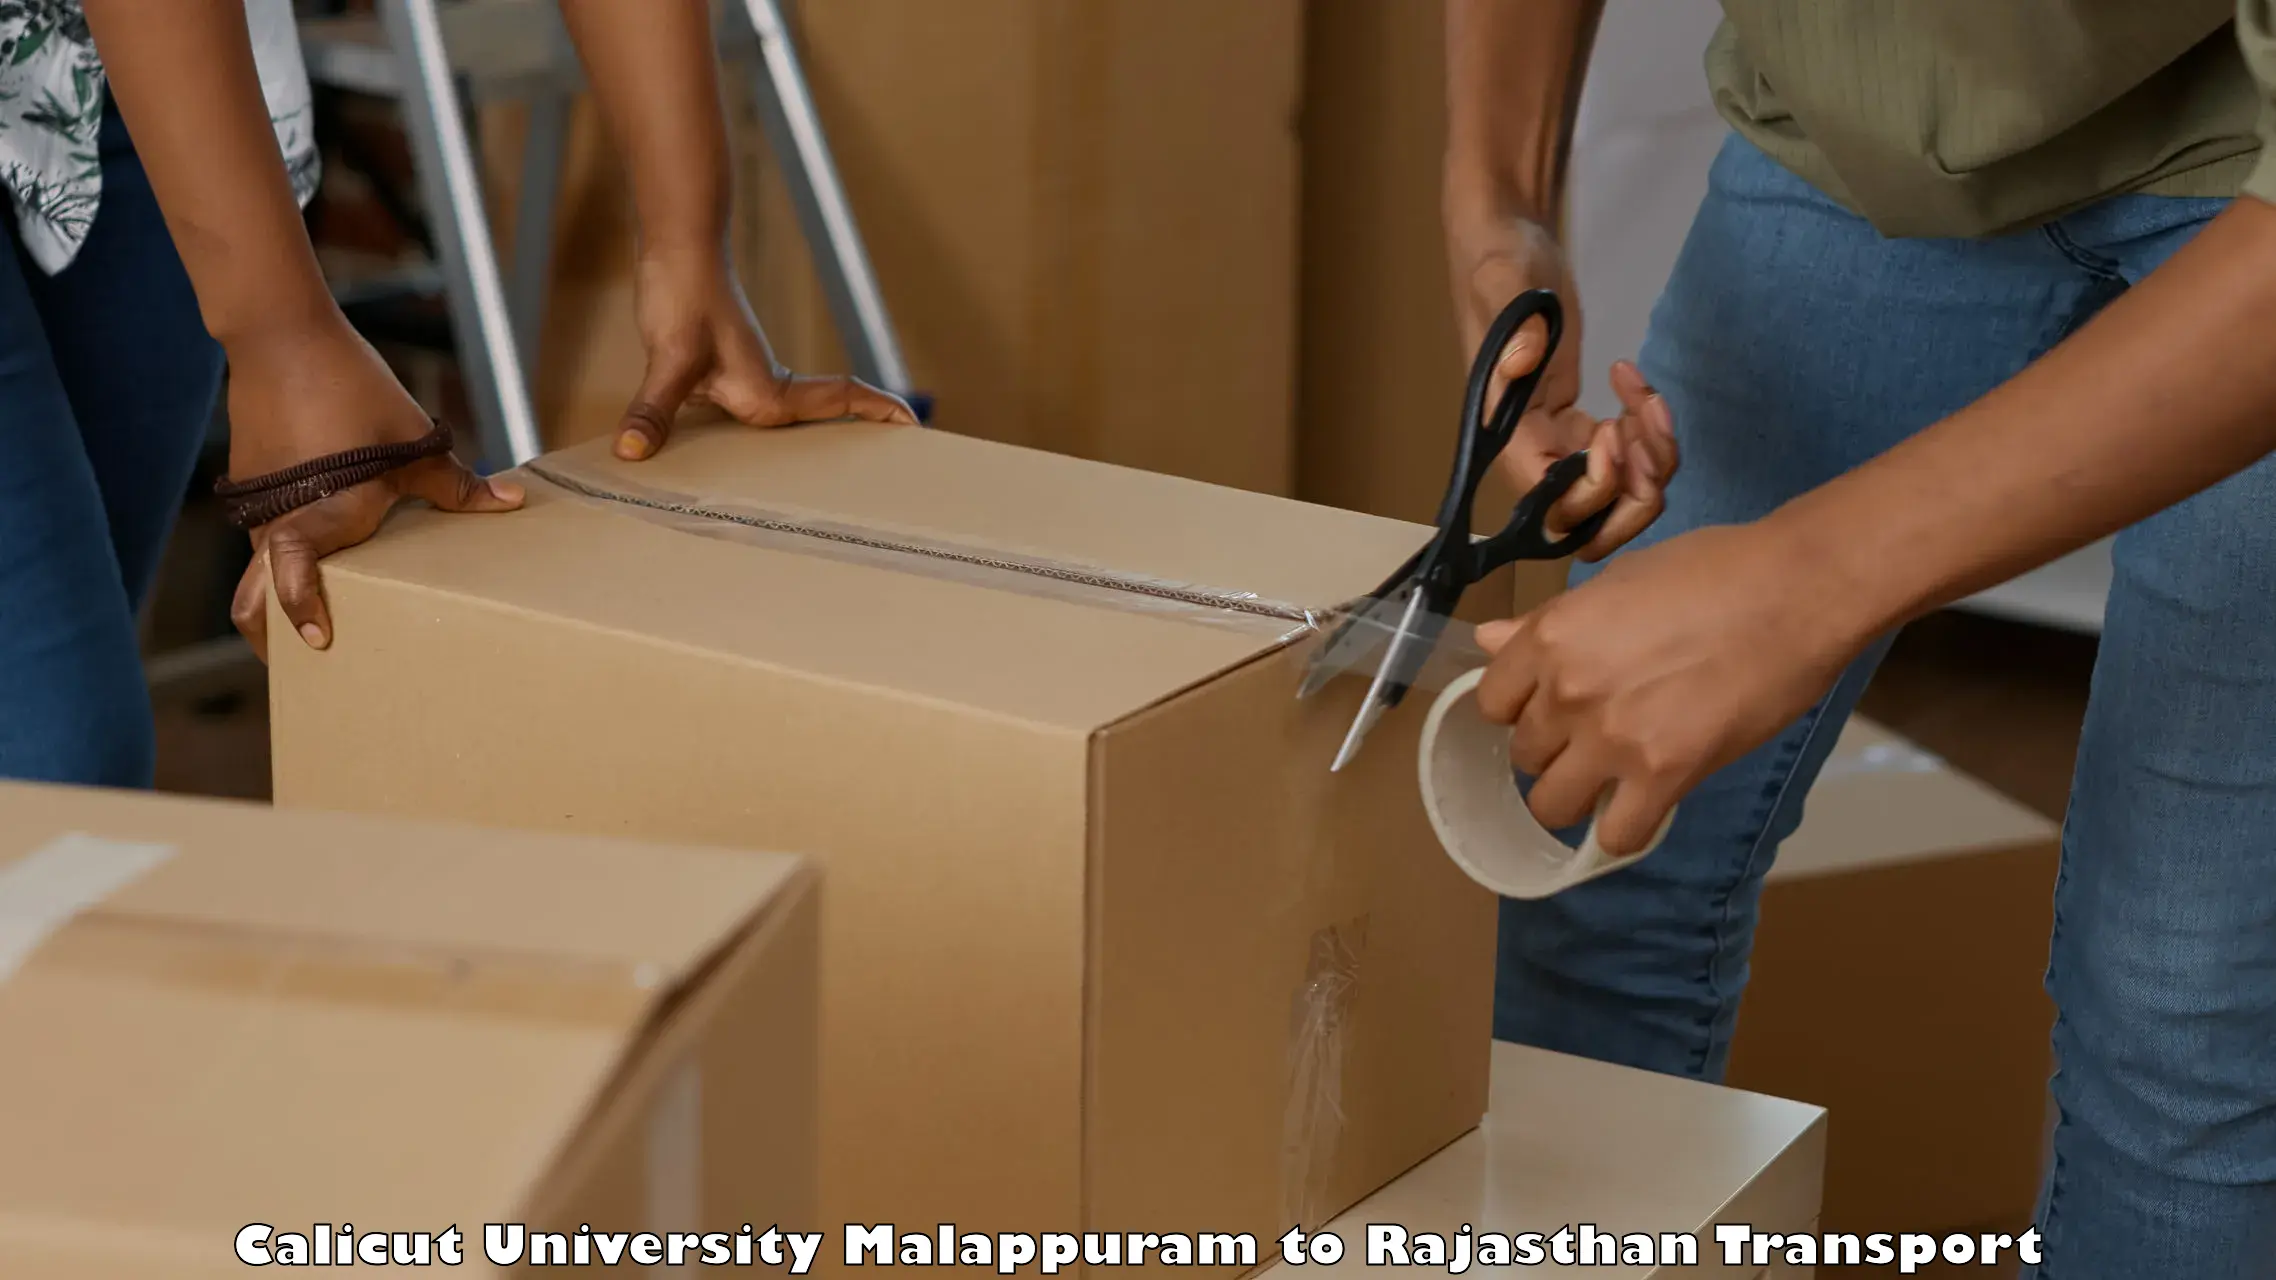 Goods delivery service Calicut University Malappuram to Rajgarh Rajasthan